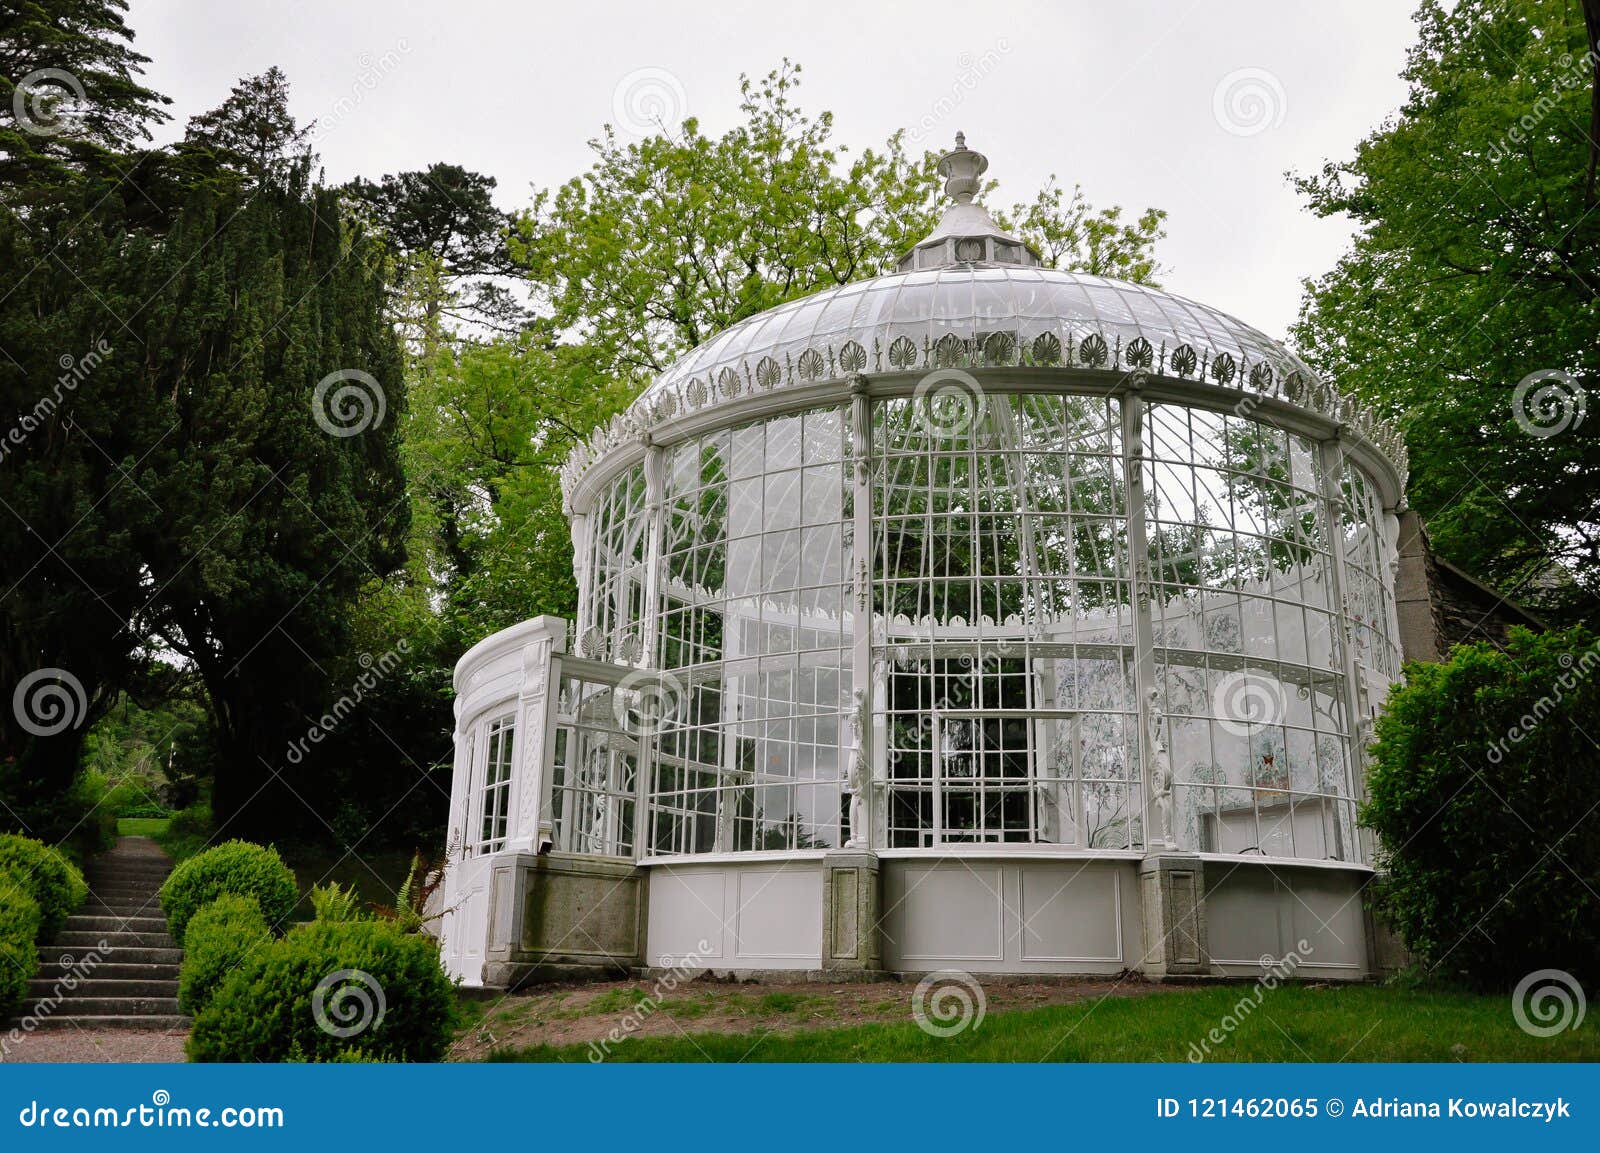 Woodstock Gardens Greenhouse In Ireland Stock Image Image Of